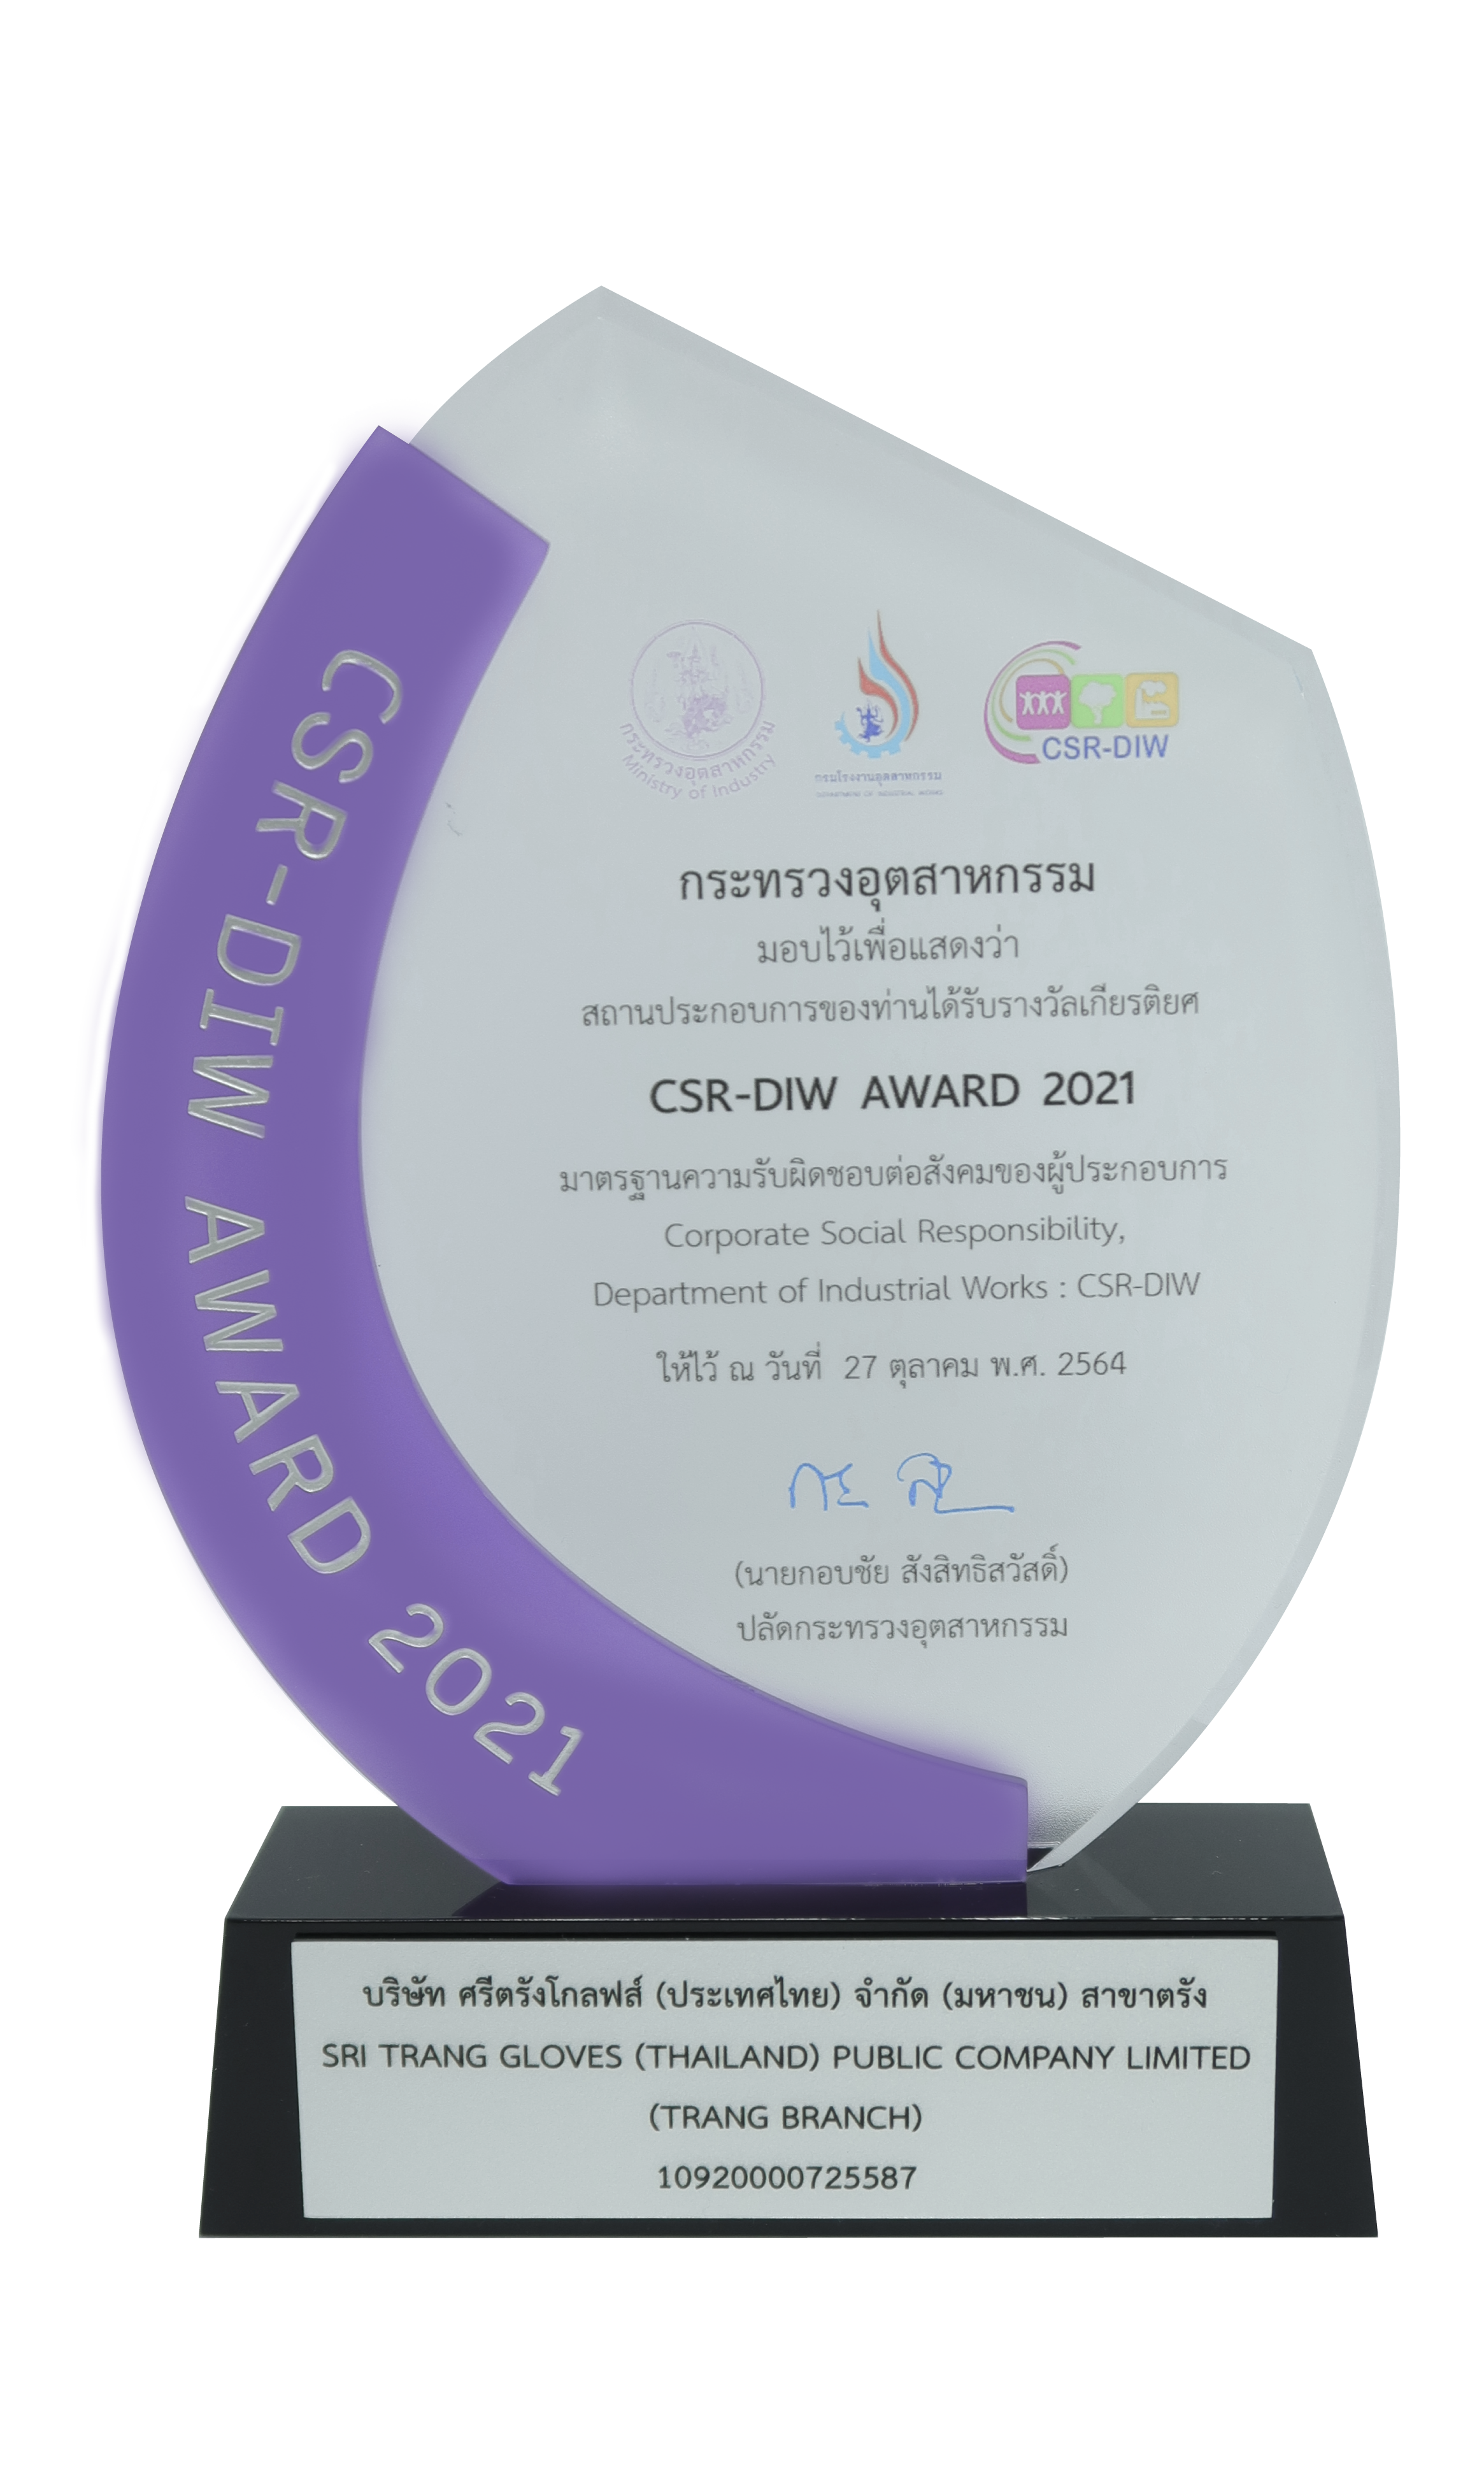 2021 CSR-DIW Award